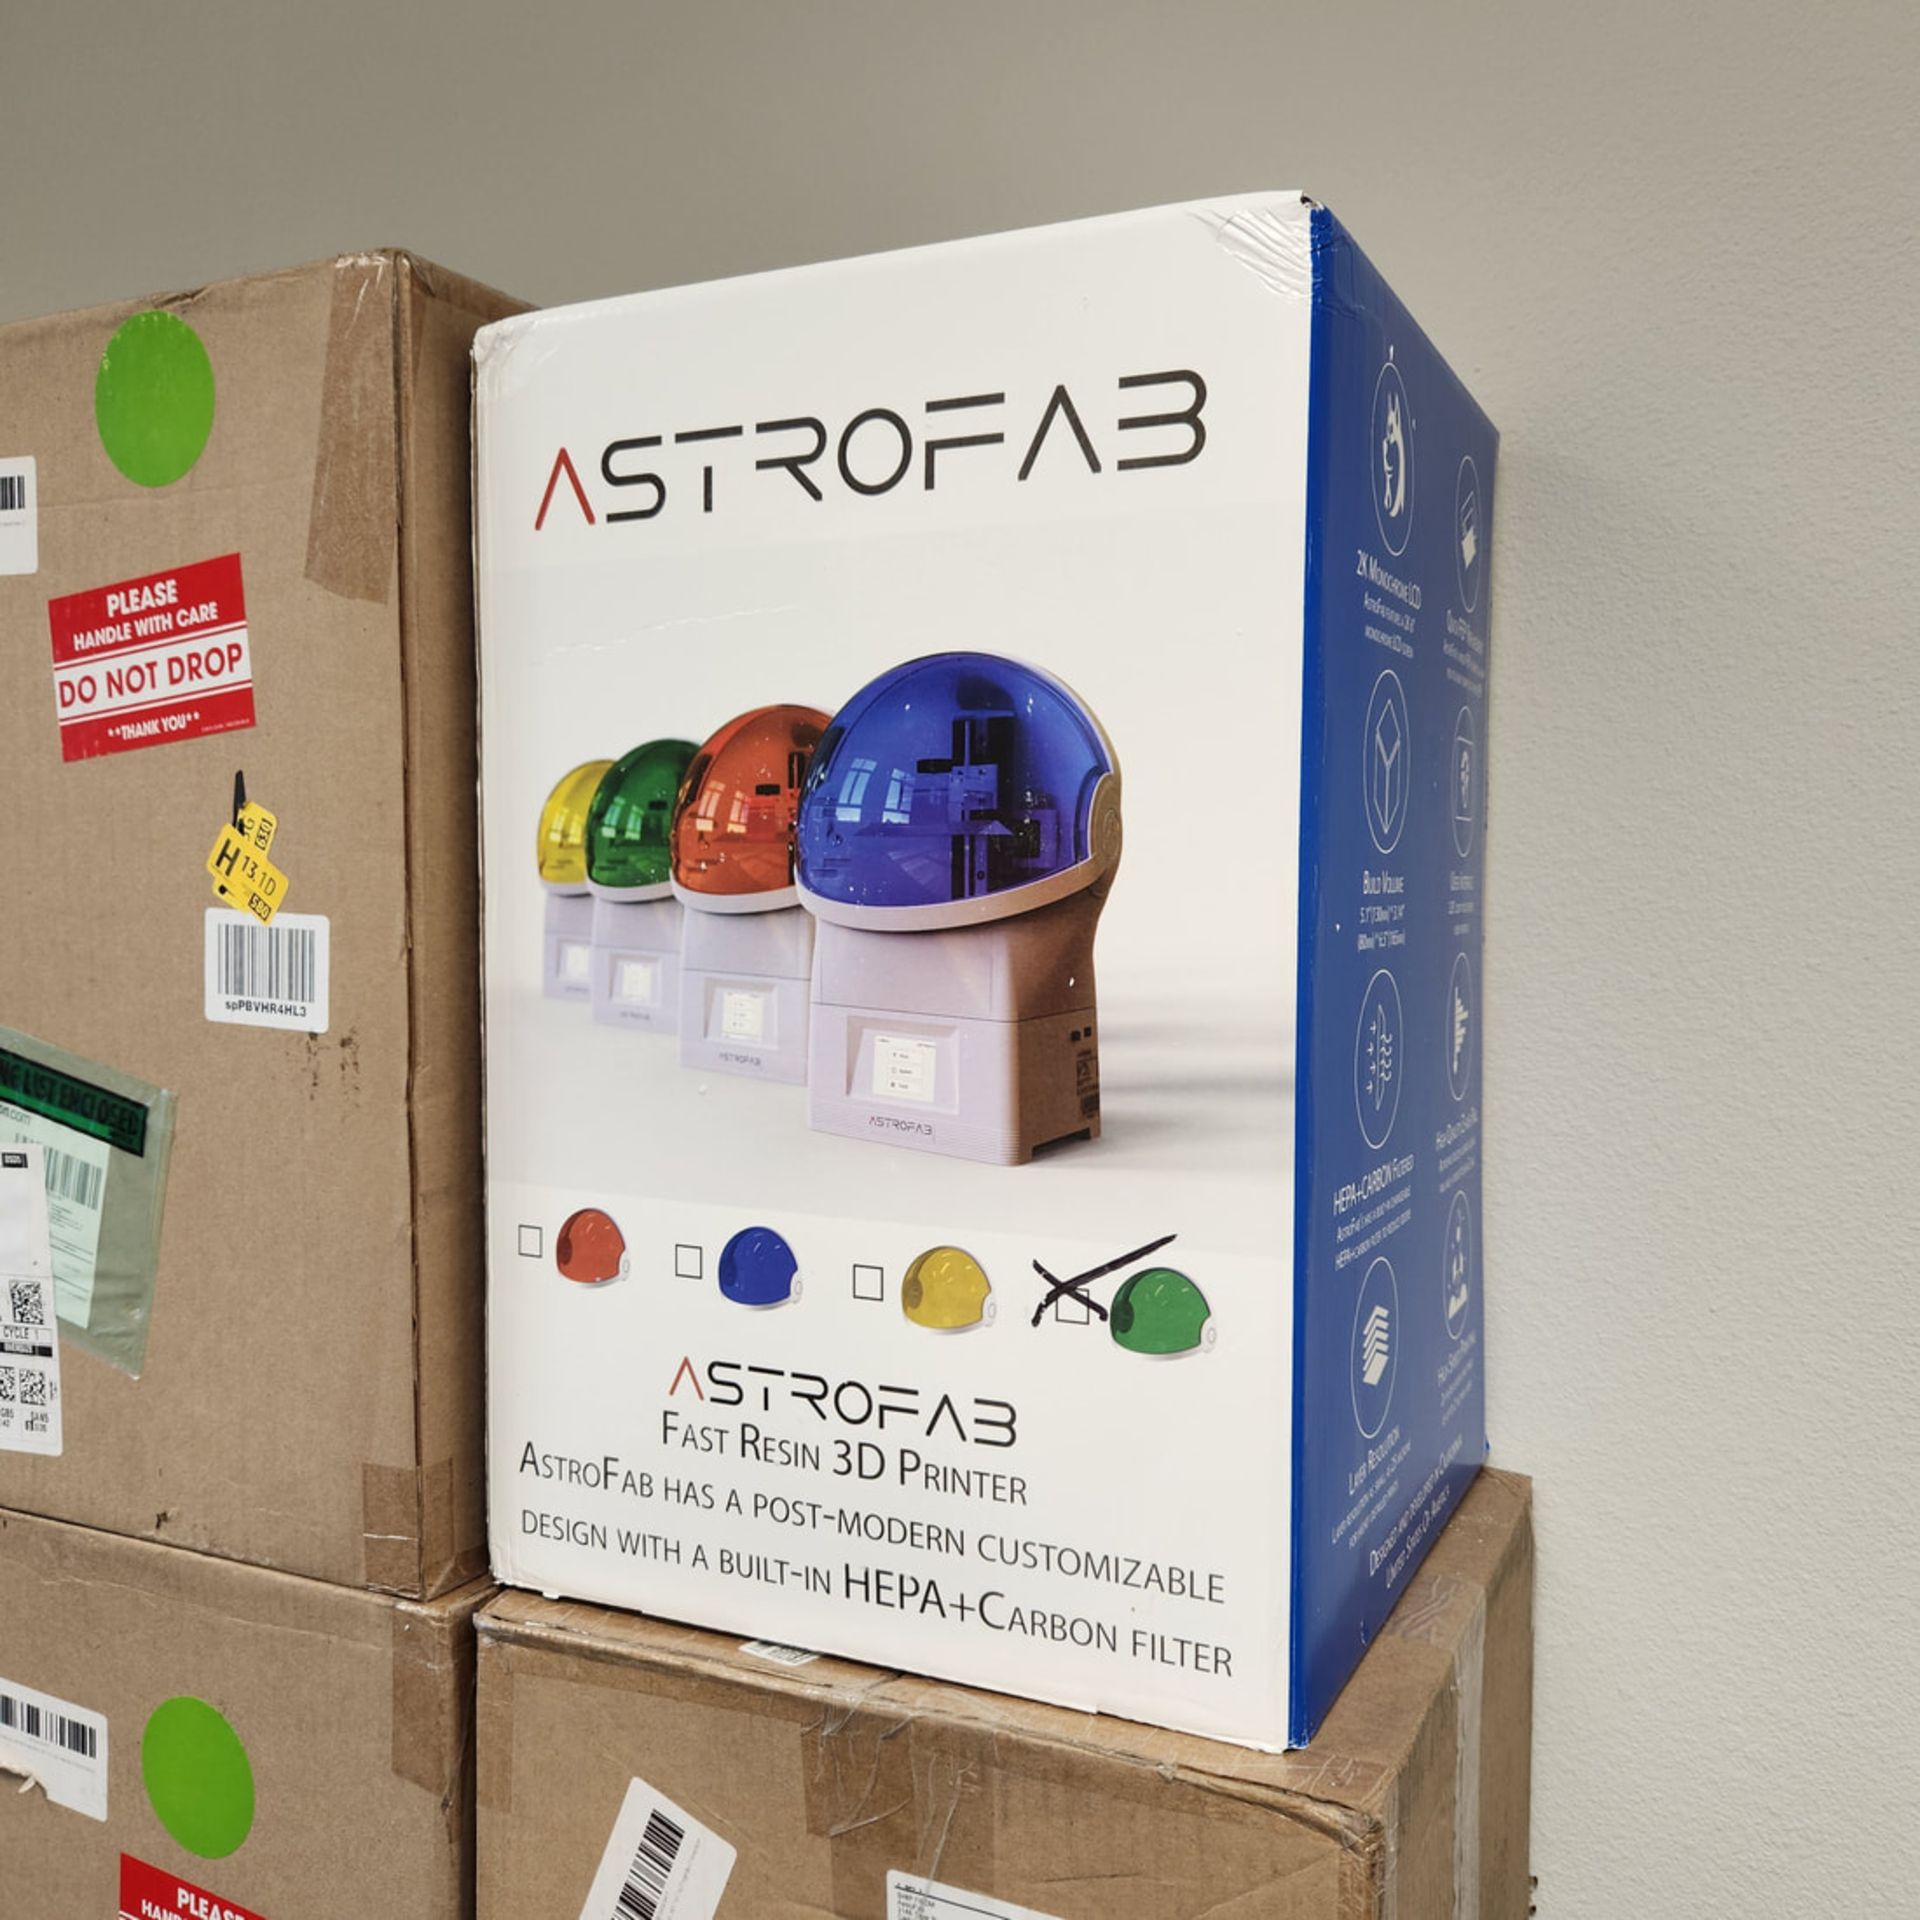 ASTROFAB FAST RESIN 3D PRINTER